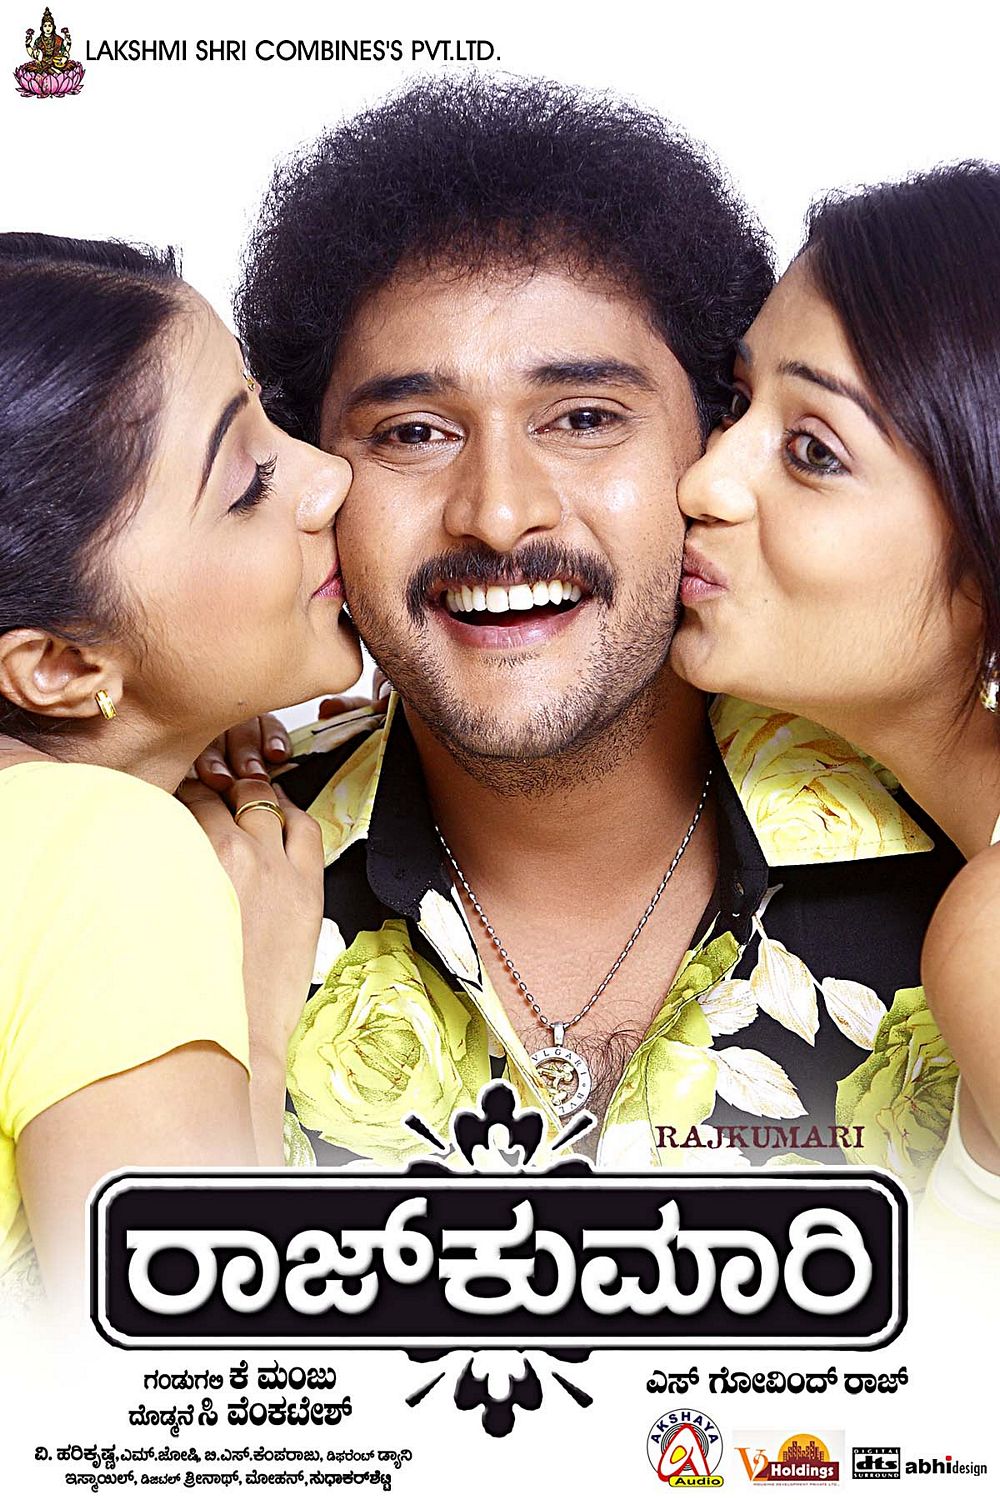 Extra Large Movie Poster Image for Rajkumari (#10 of 20)